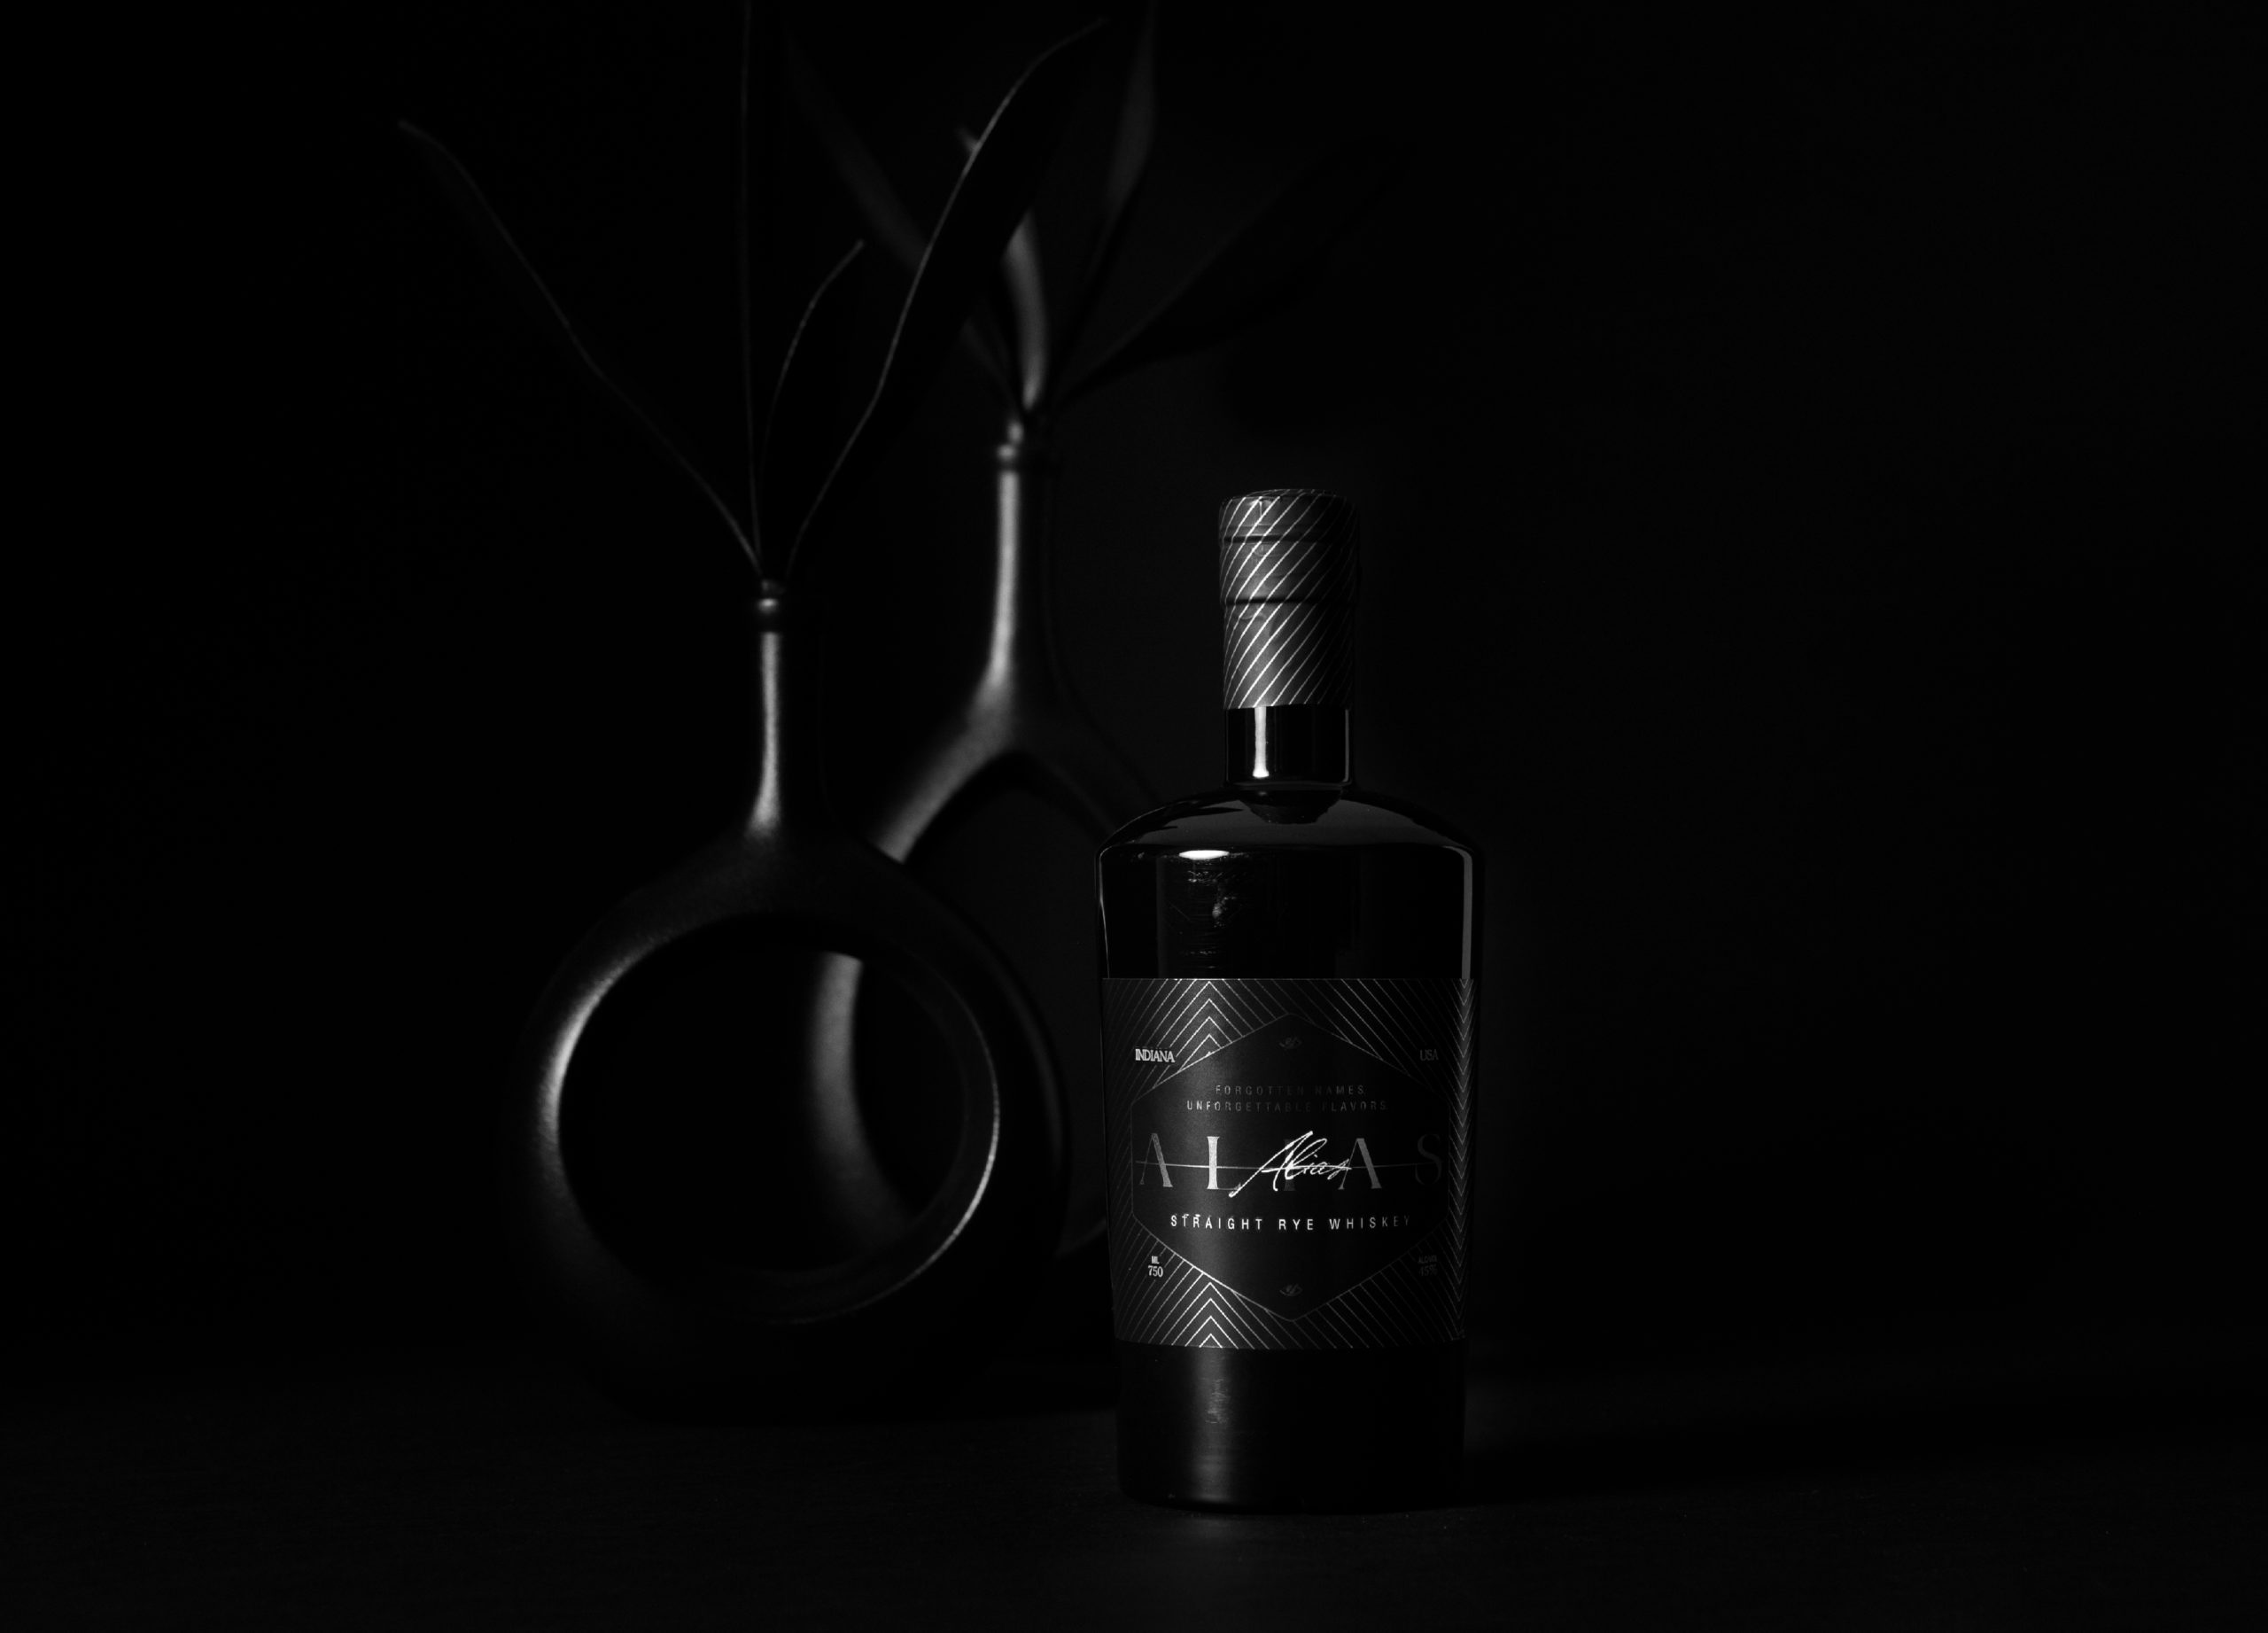 Alias Bottle with Black Vases